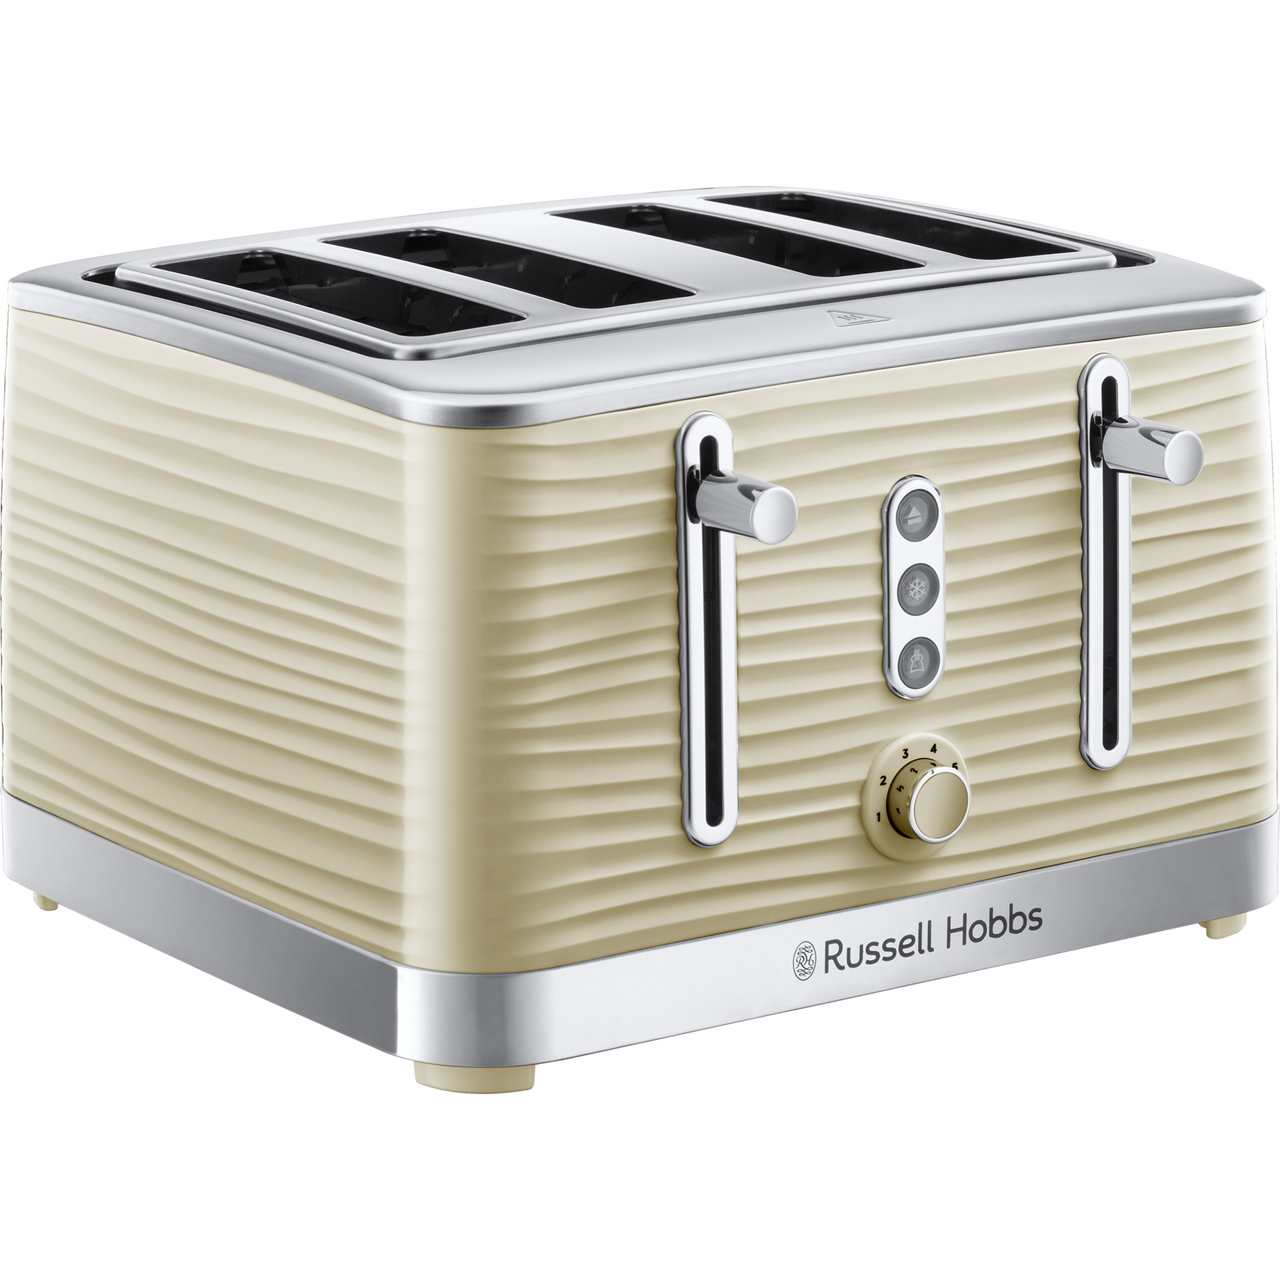 Russell Hobbs Inspire 24384 4 Slice Toaster - Cream, Cream